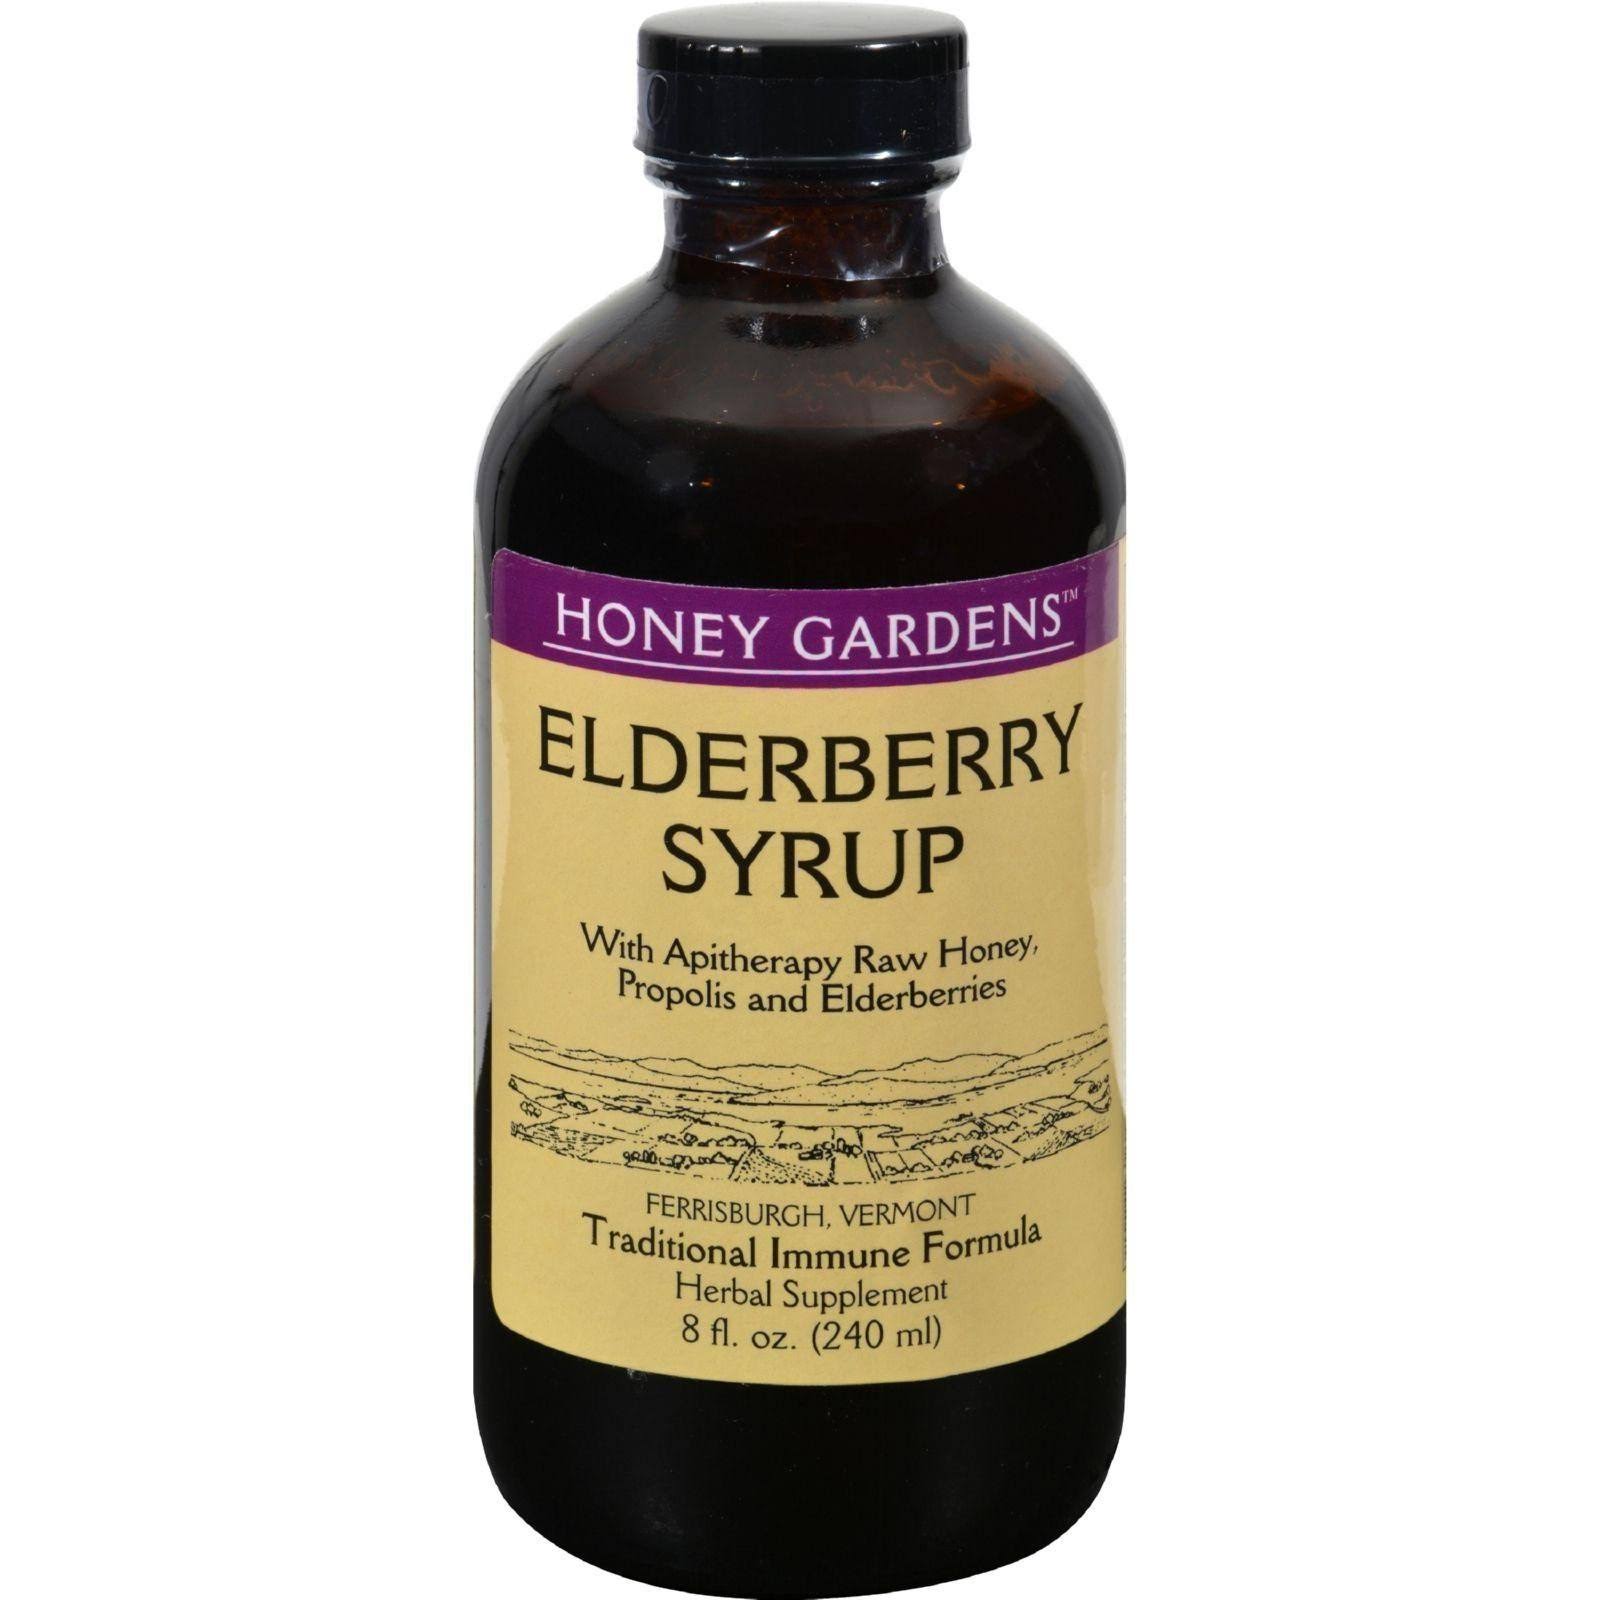 Honey Garden Apitherapy Organic Elderberry Syrup Extract - with Propolis, 8oz